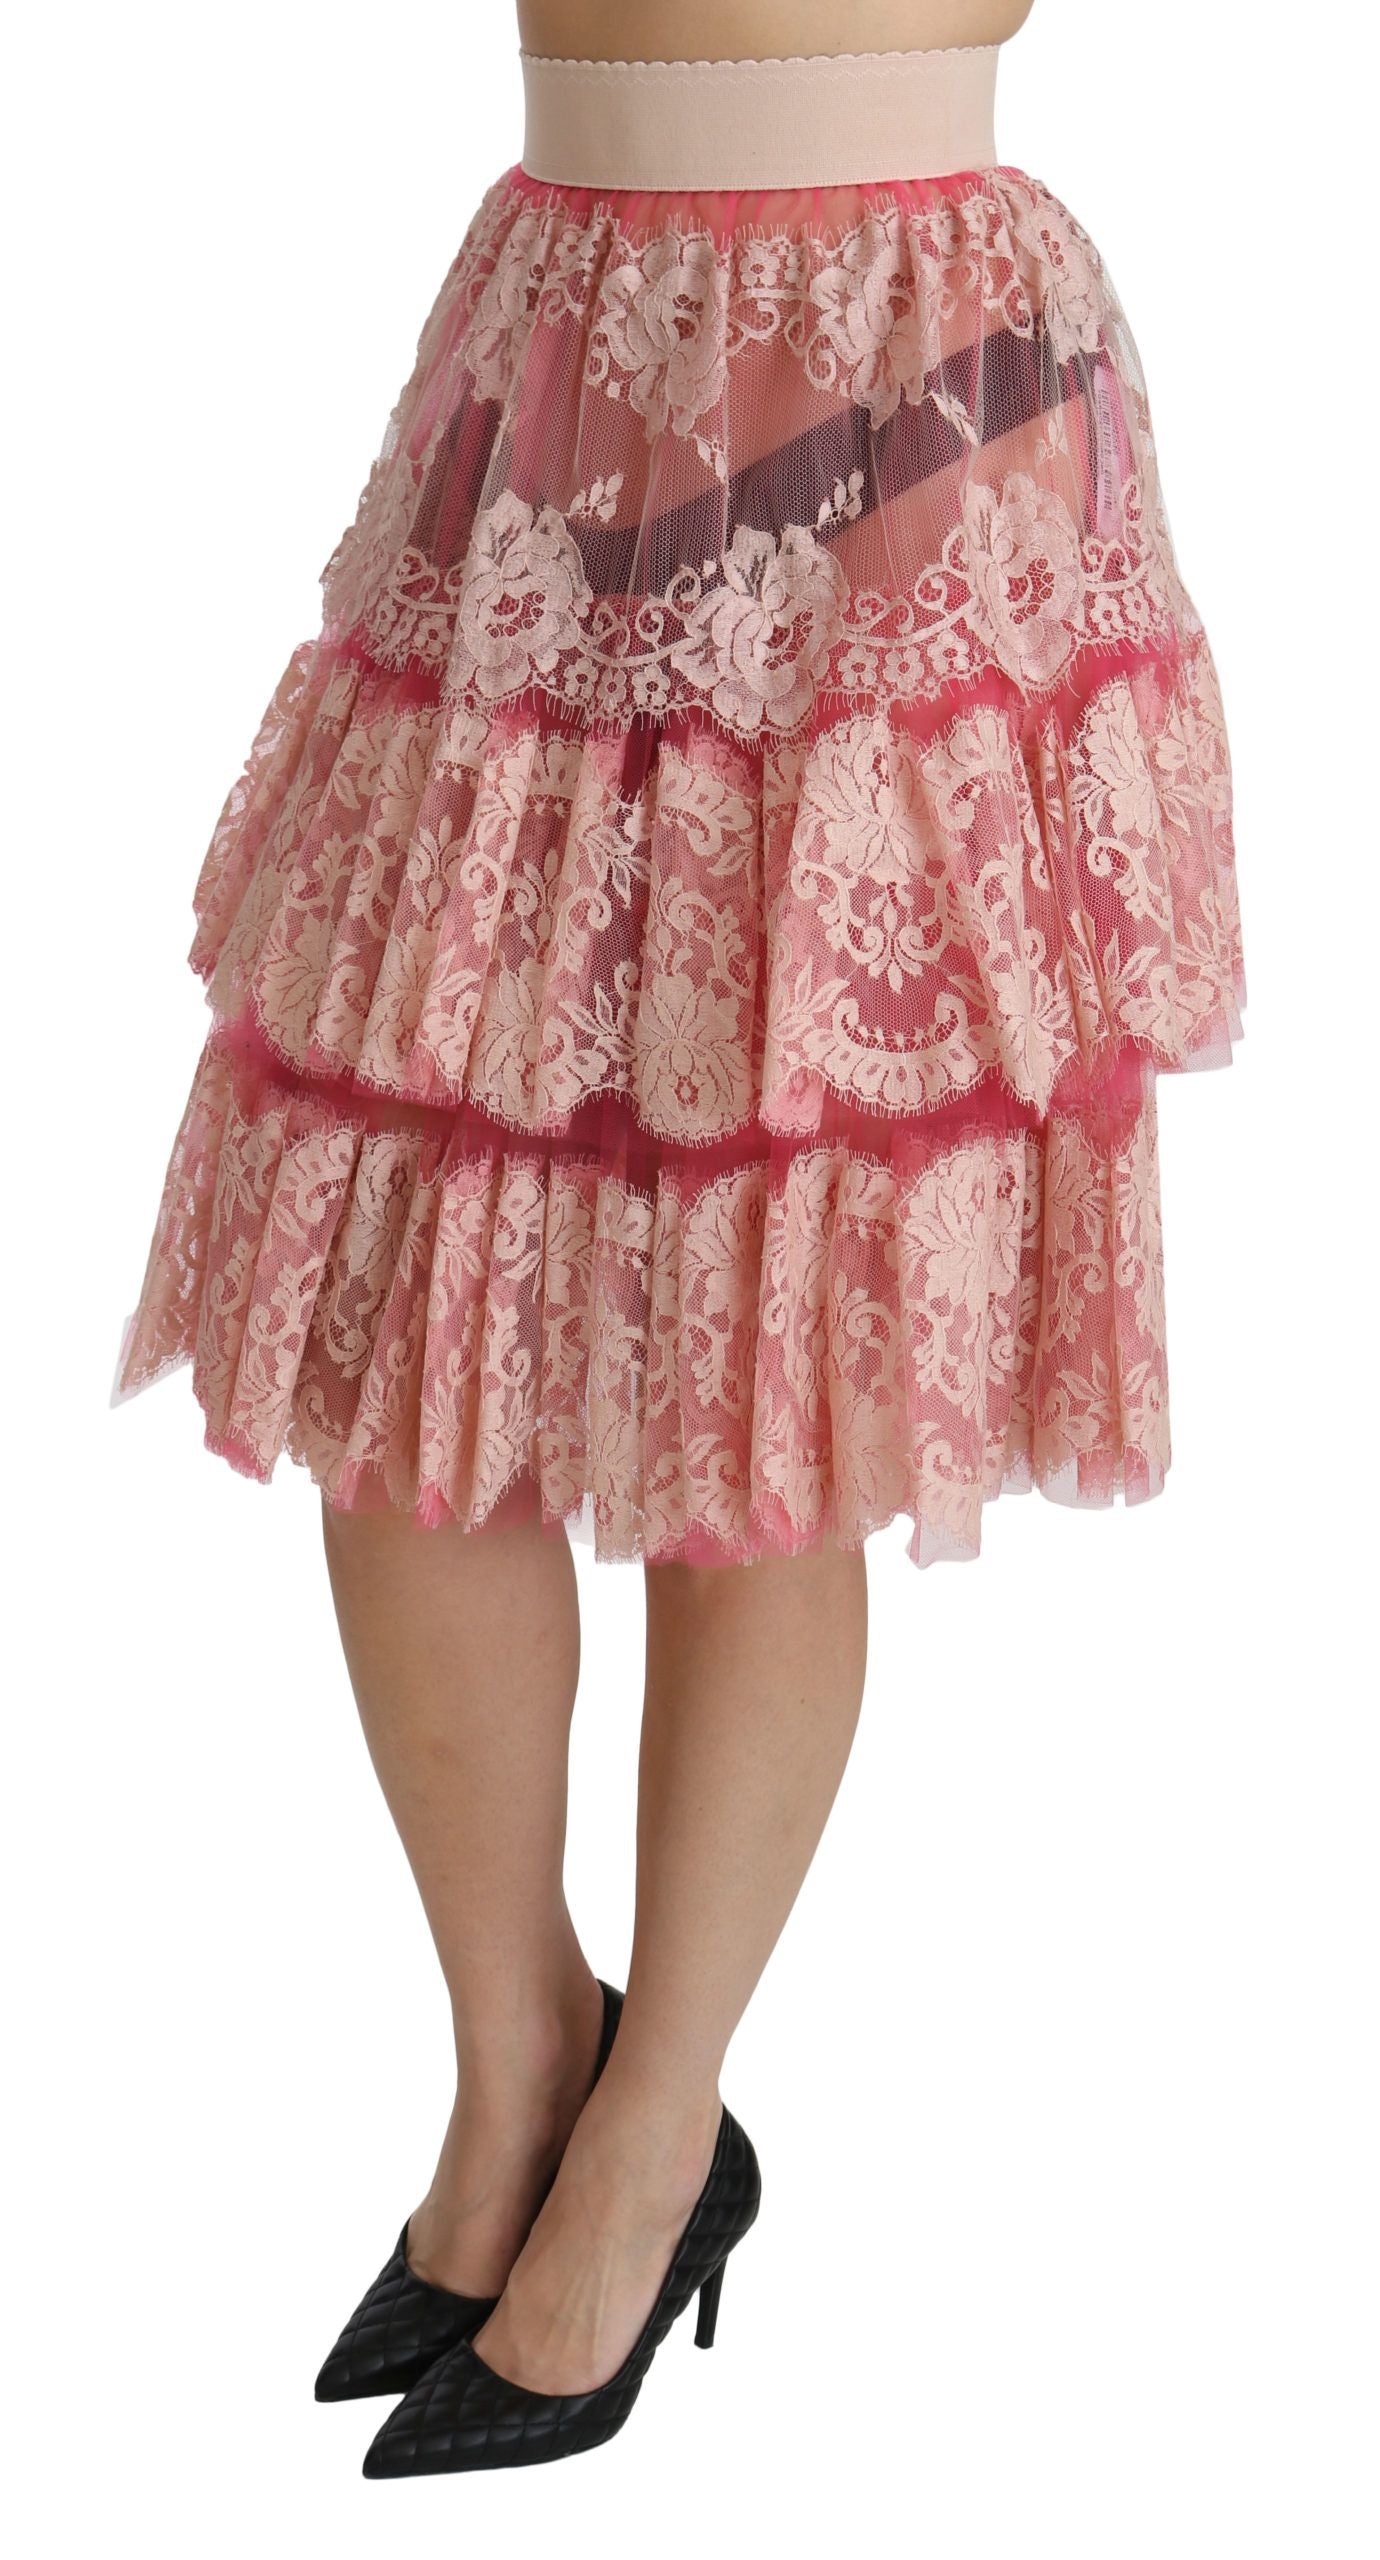 Pink Lace Layered High Waist Knee Length Skirt